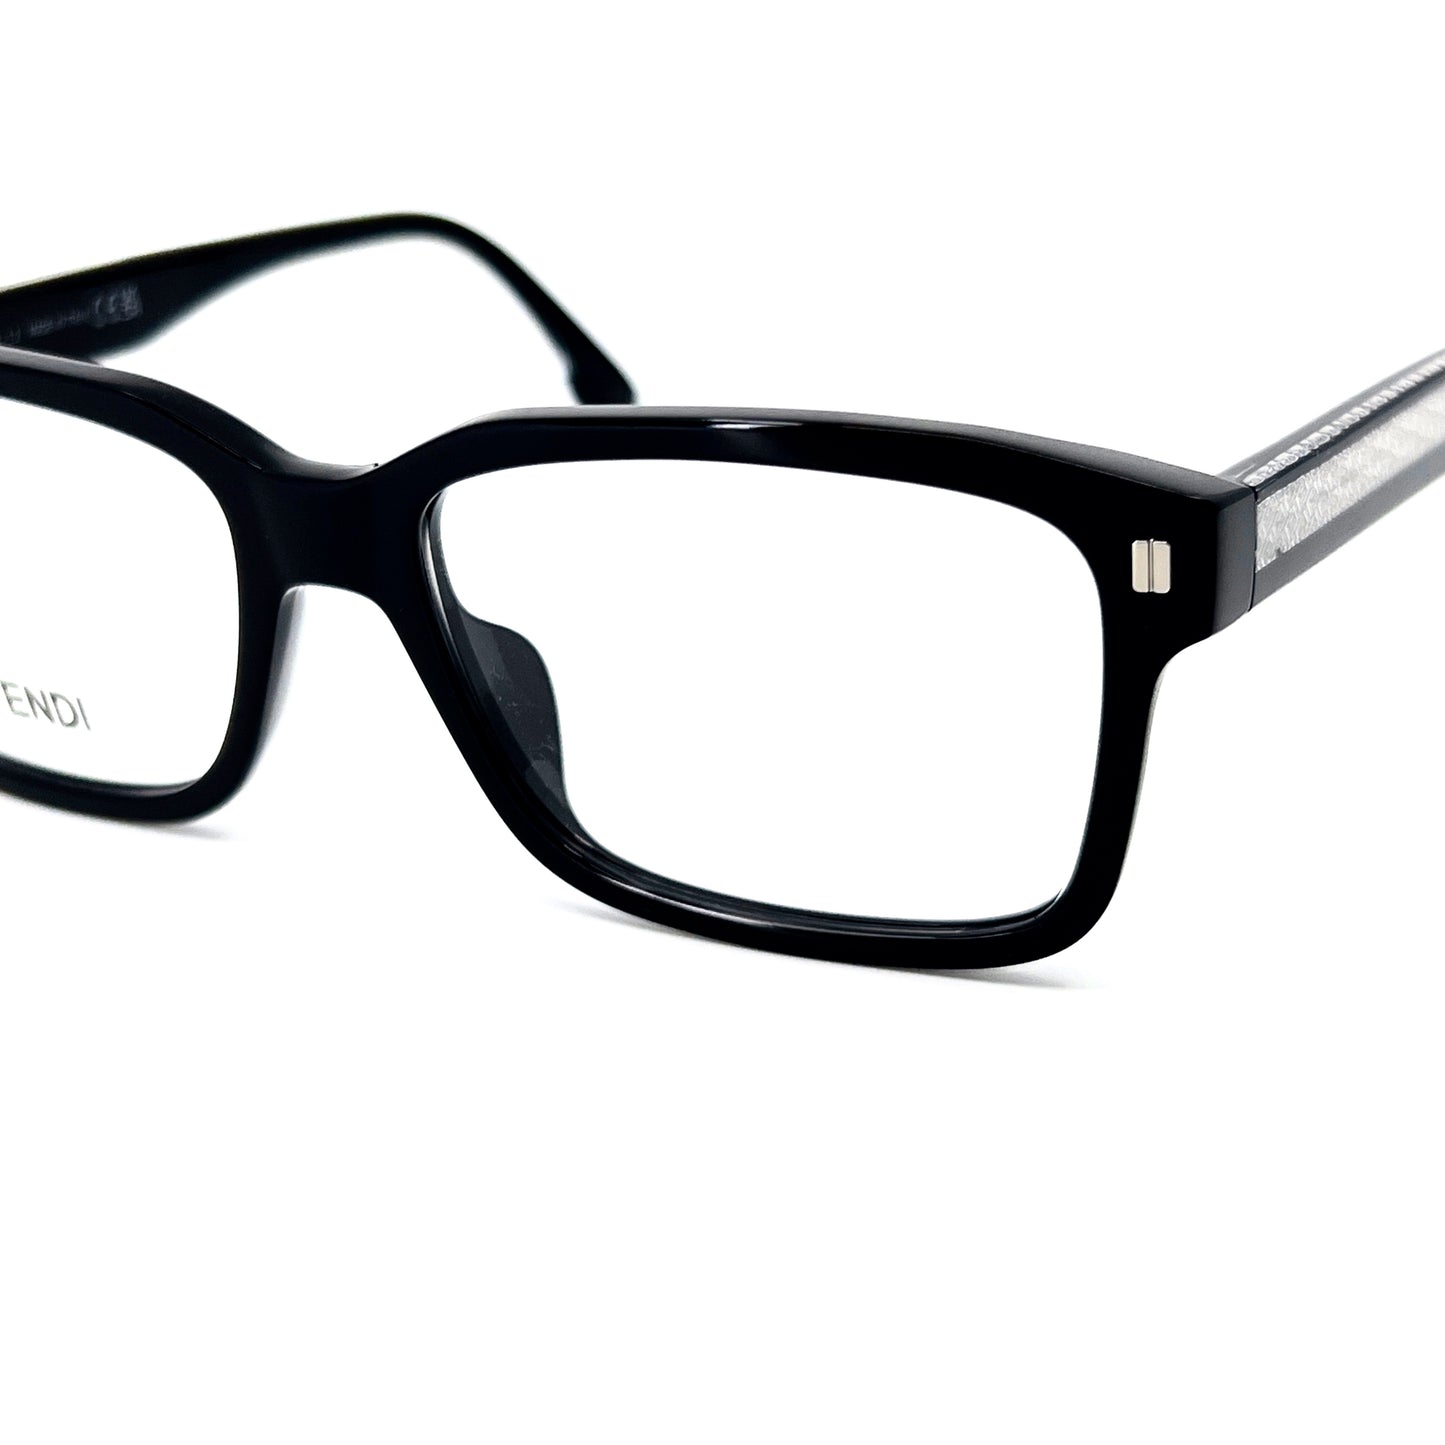 FENDI Eyeglasses FE50030I 001